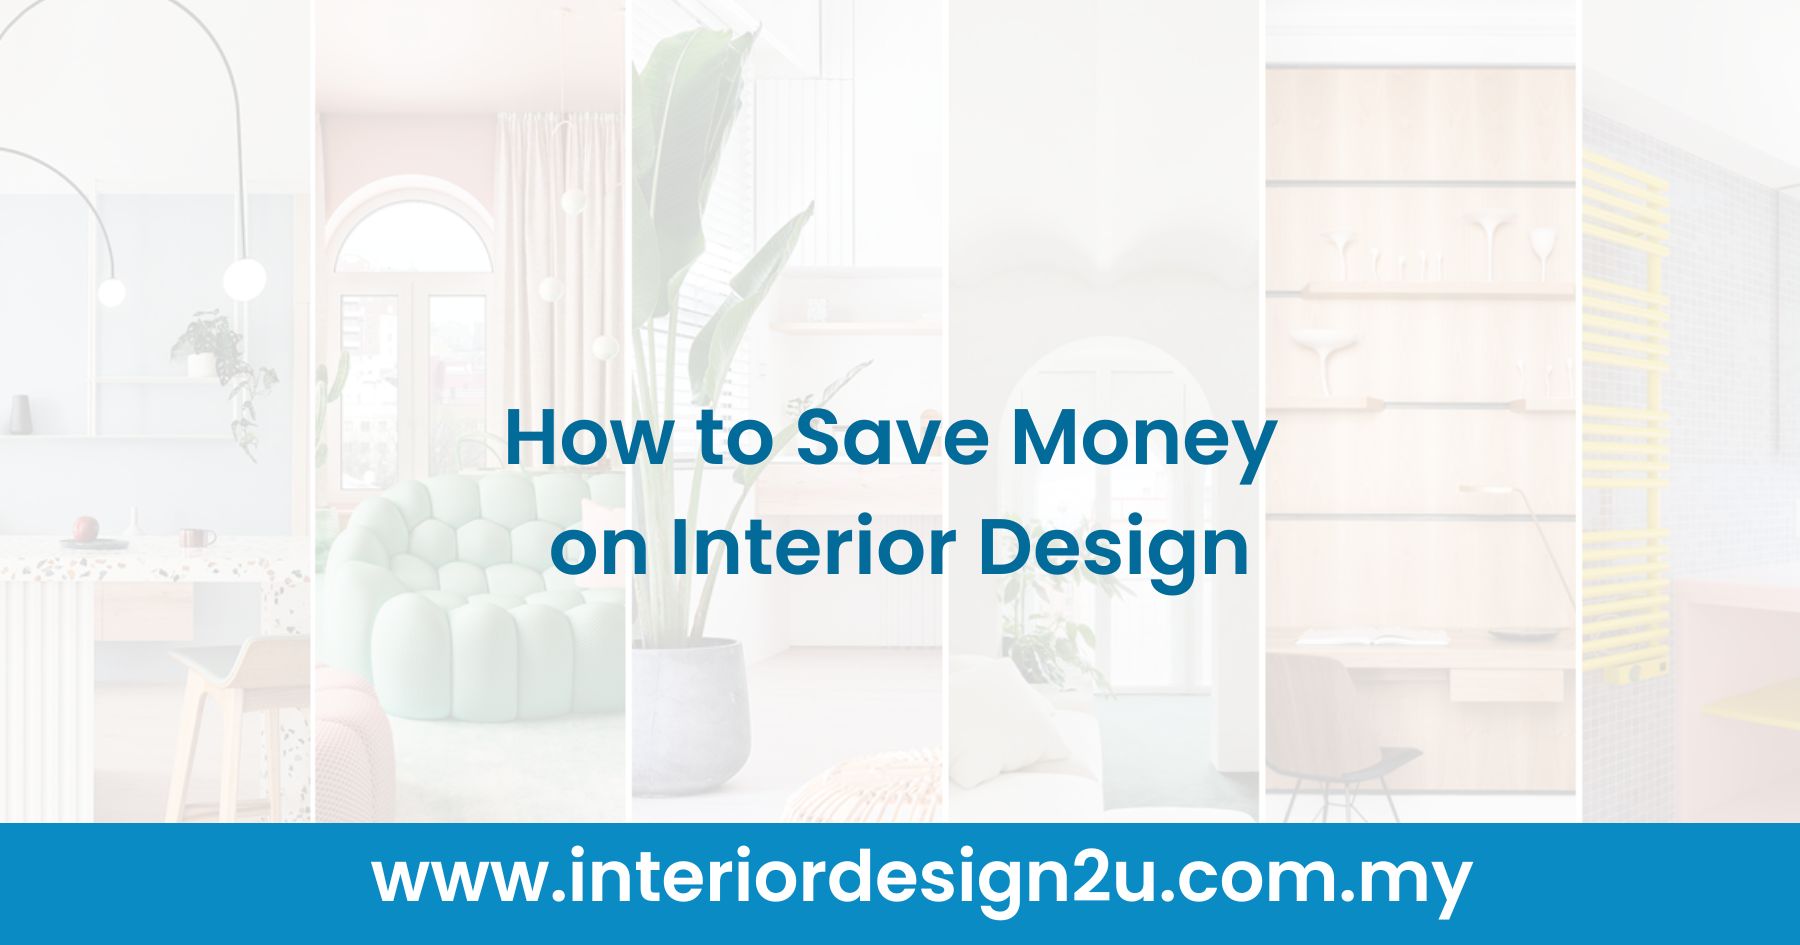 How to Save Money on Interior Design